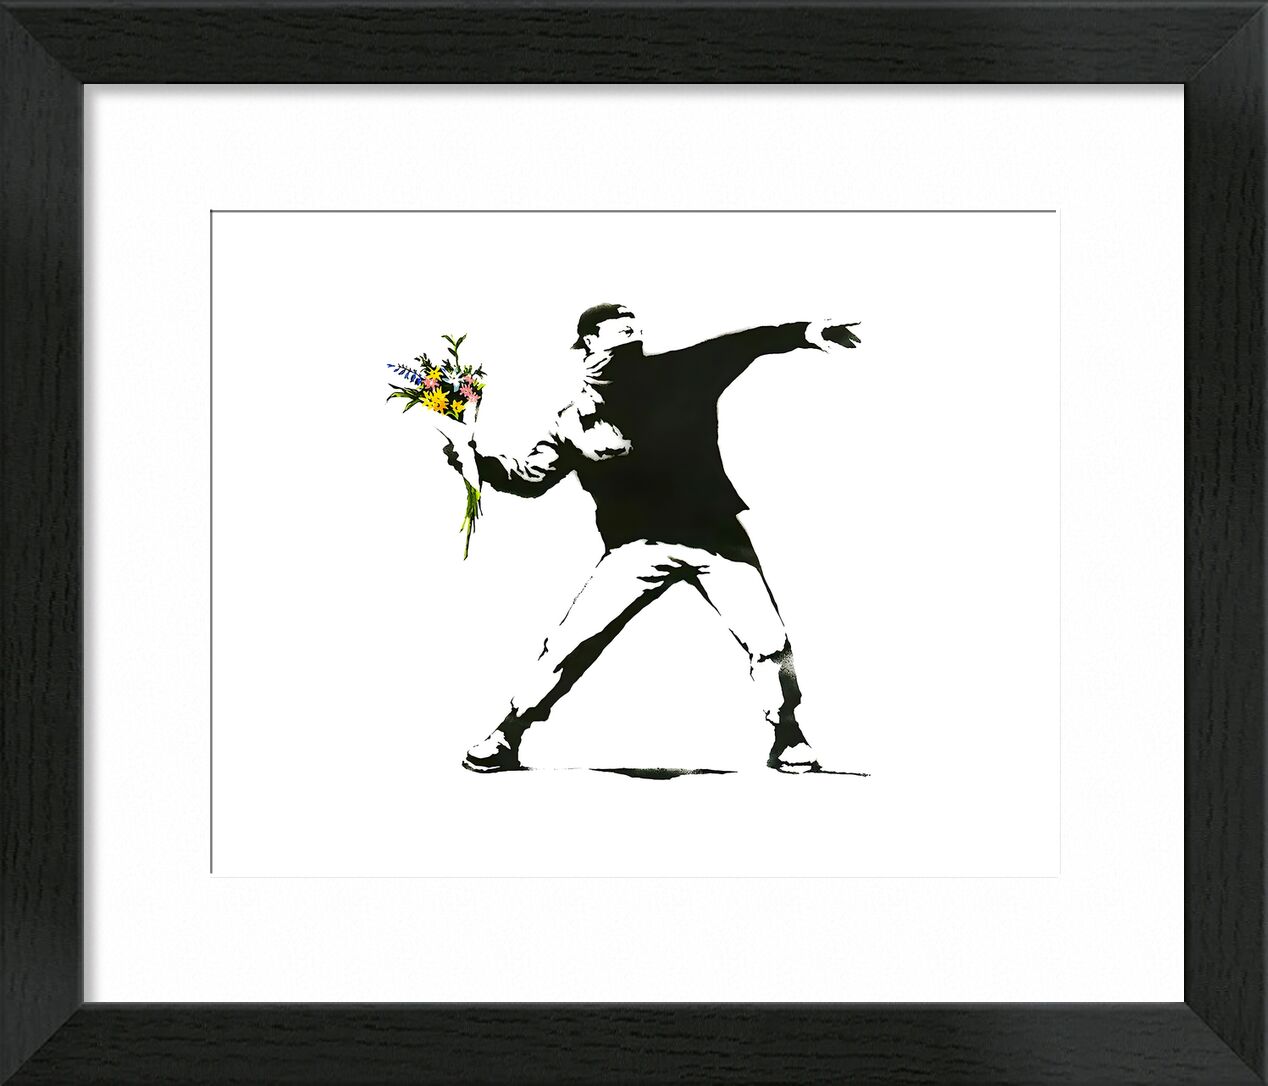 Flower Chucker - BANKSY von Bildende Kunst, Prodi Art, Startprogramm, Graffiti, Blume, Straßenkunst, banksy